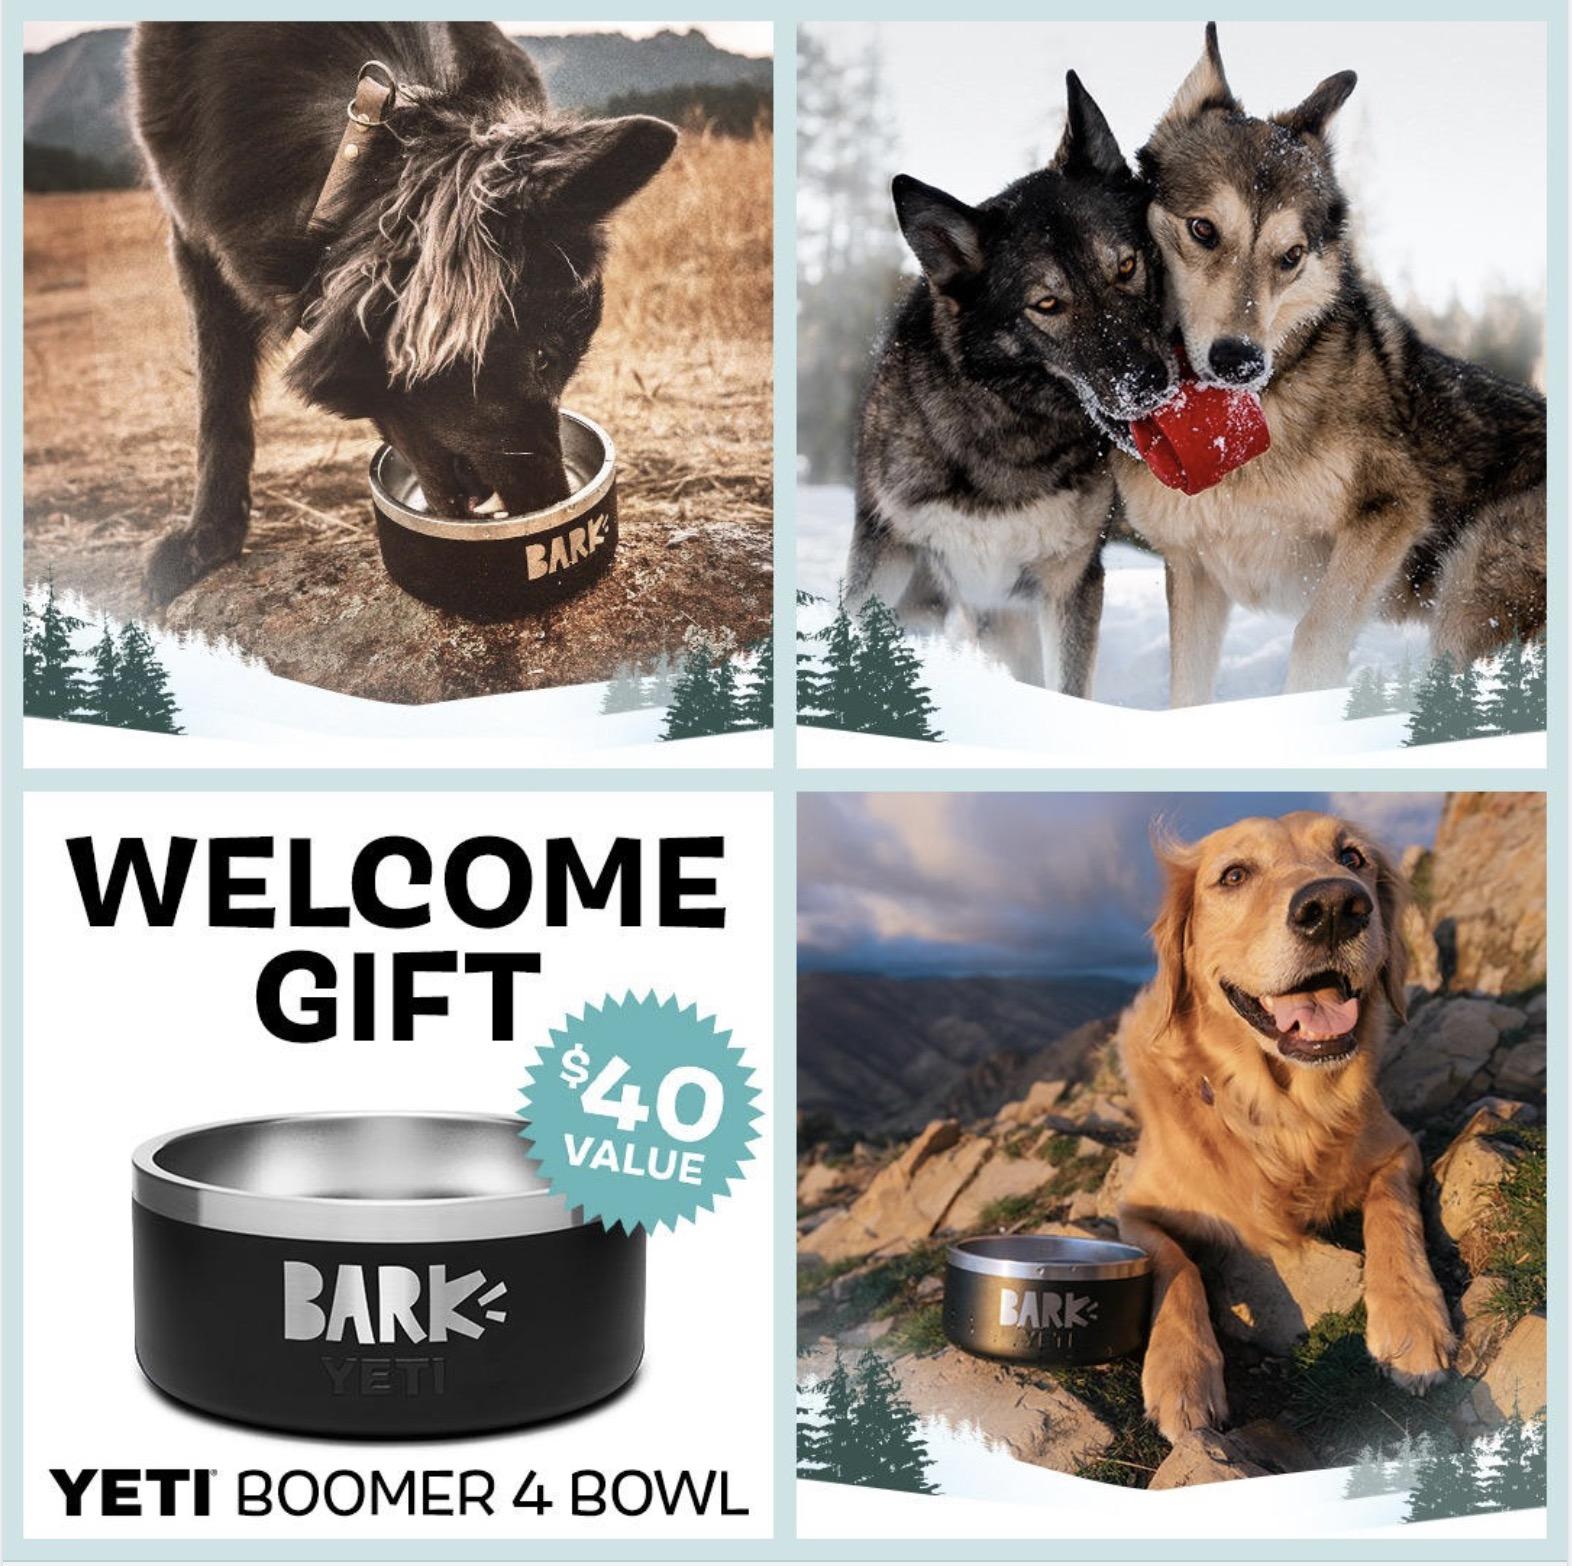 BarkBox Super Chewer Coupon Code – FREE Yeti Dog Bowl!